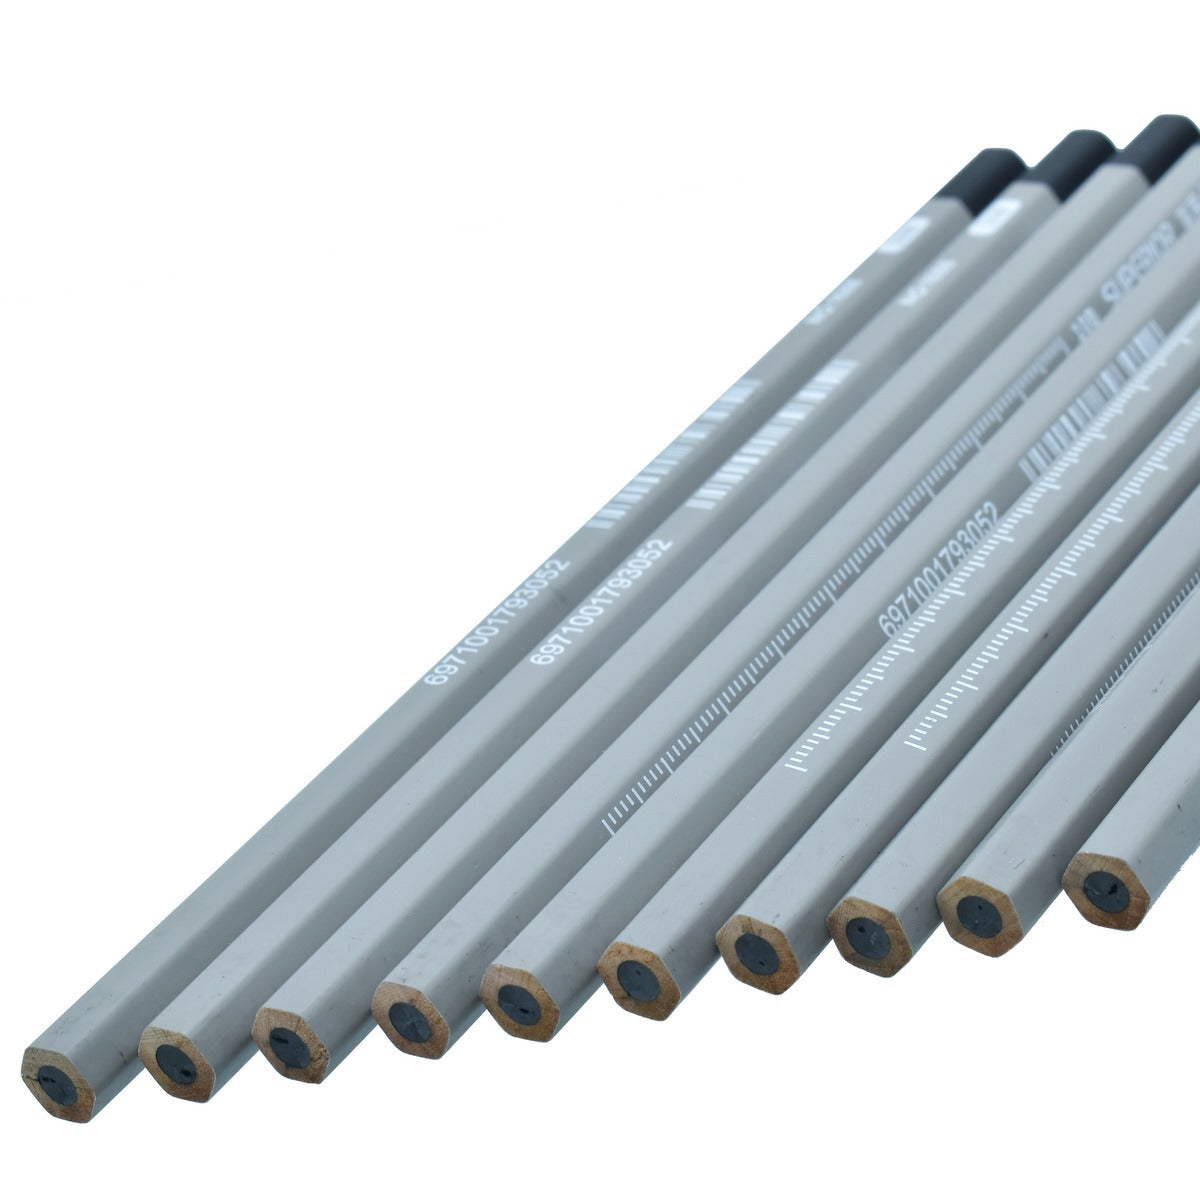 jags-mumbai Charcoal Pencils Superior Charcoal Drawing Pencil (10Pcs)